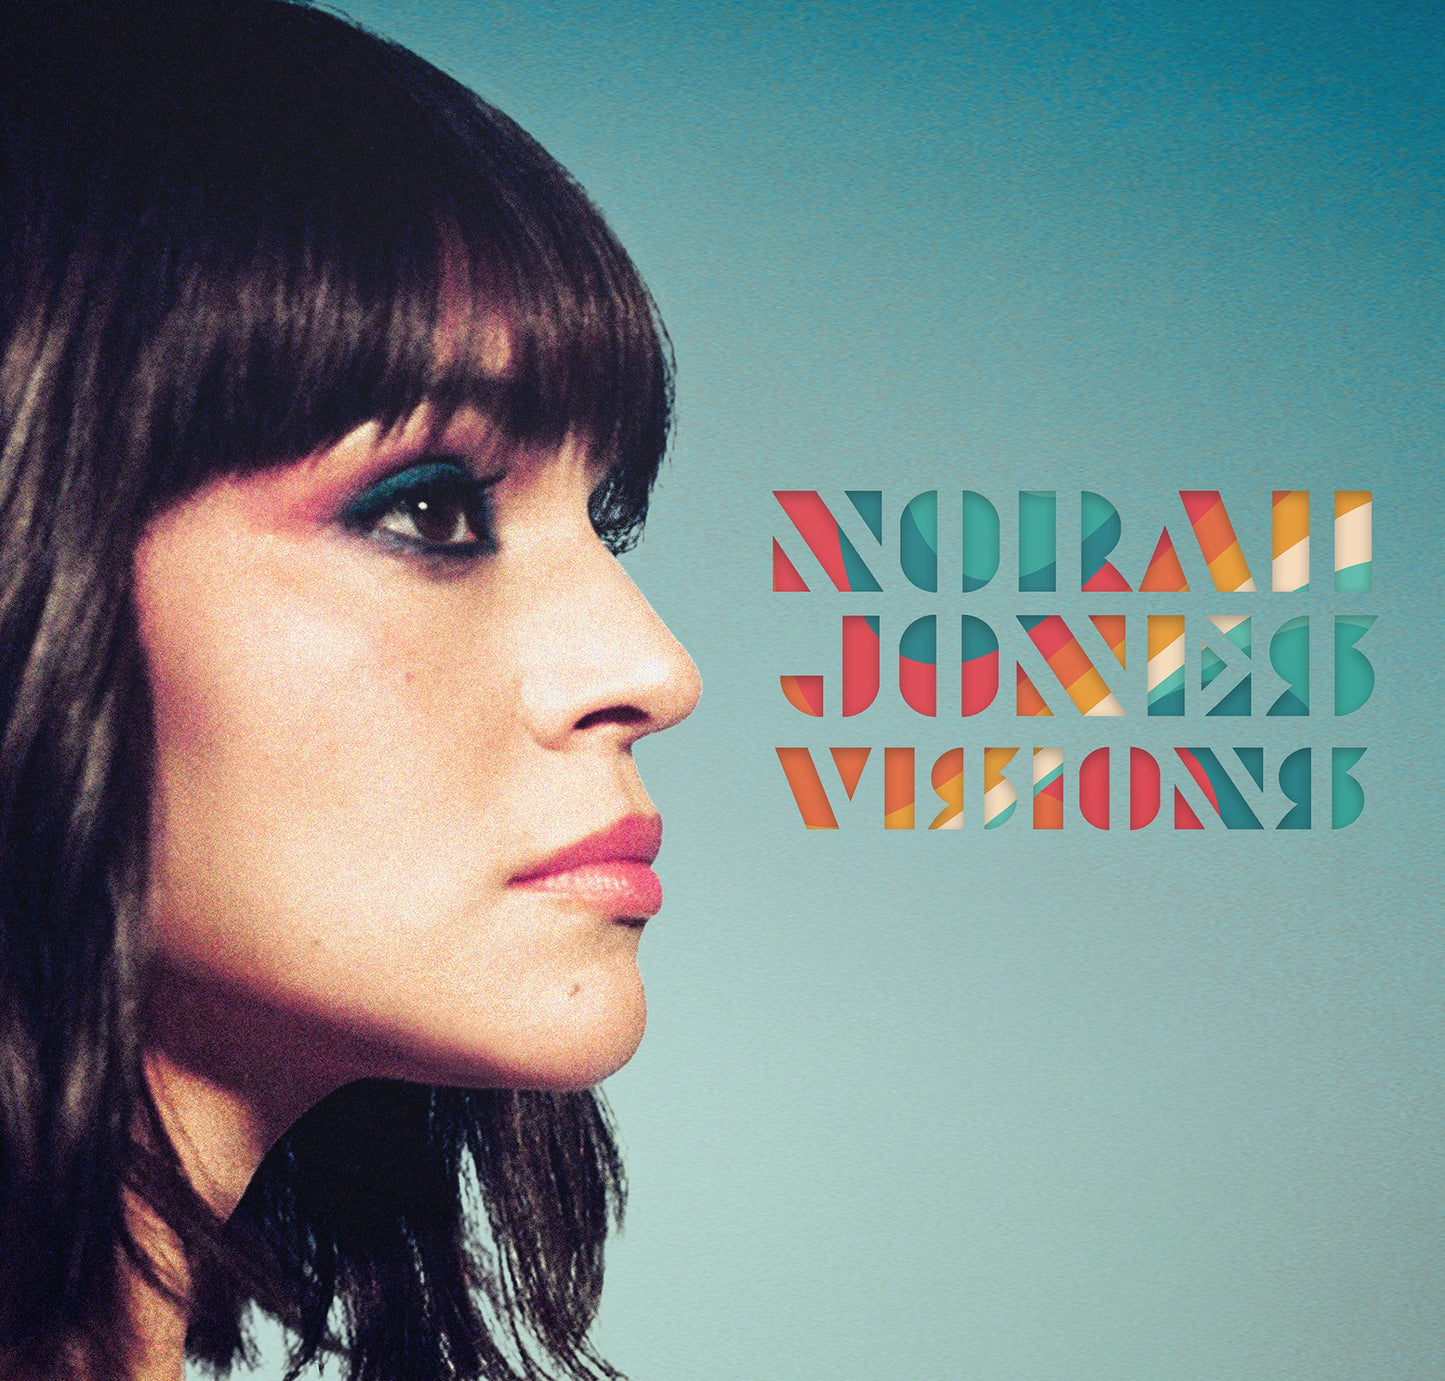 Norah Jones - Visions - Vinyl